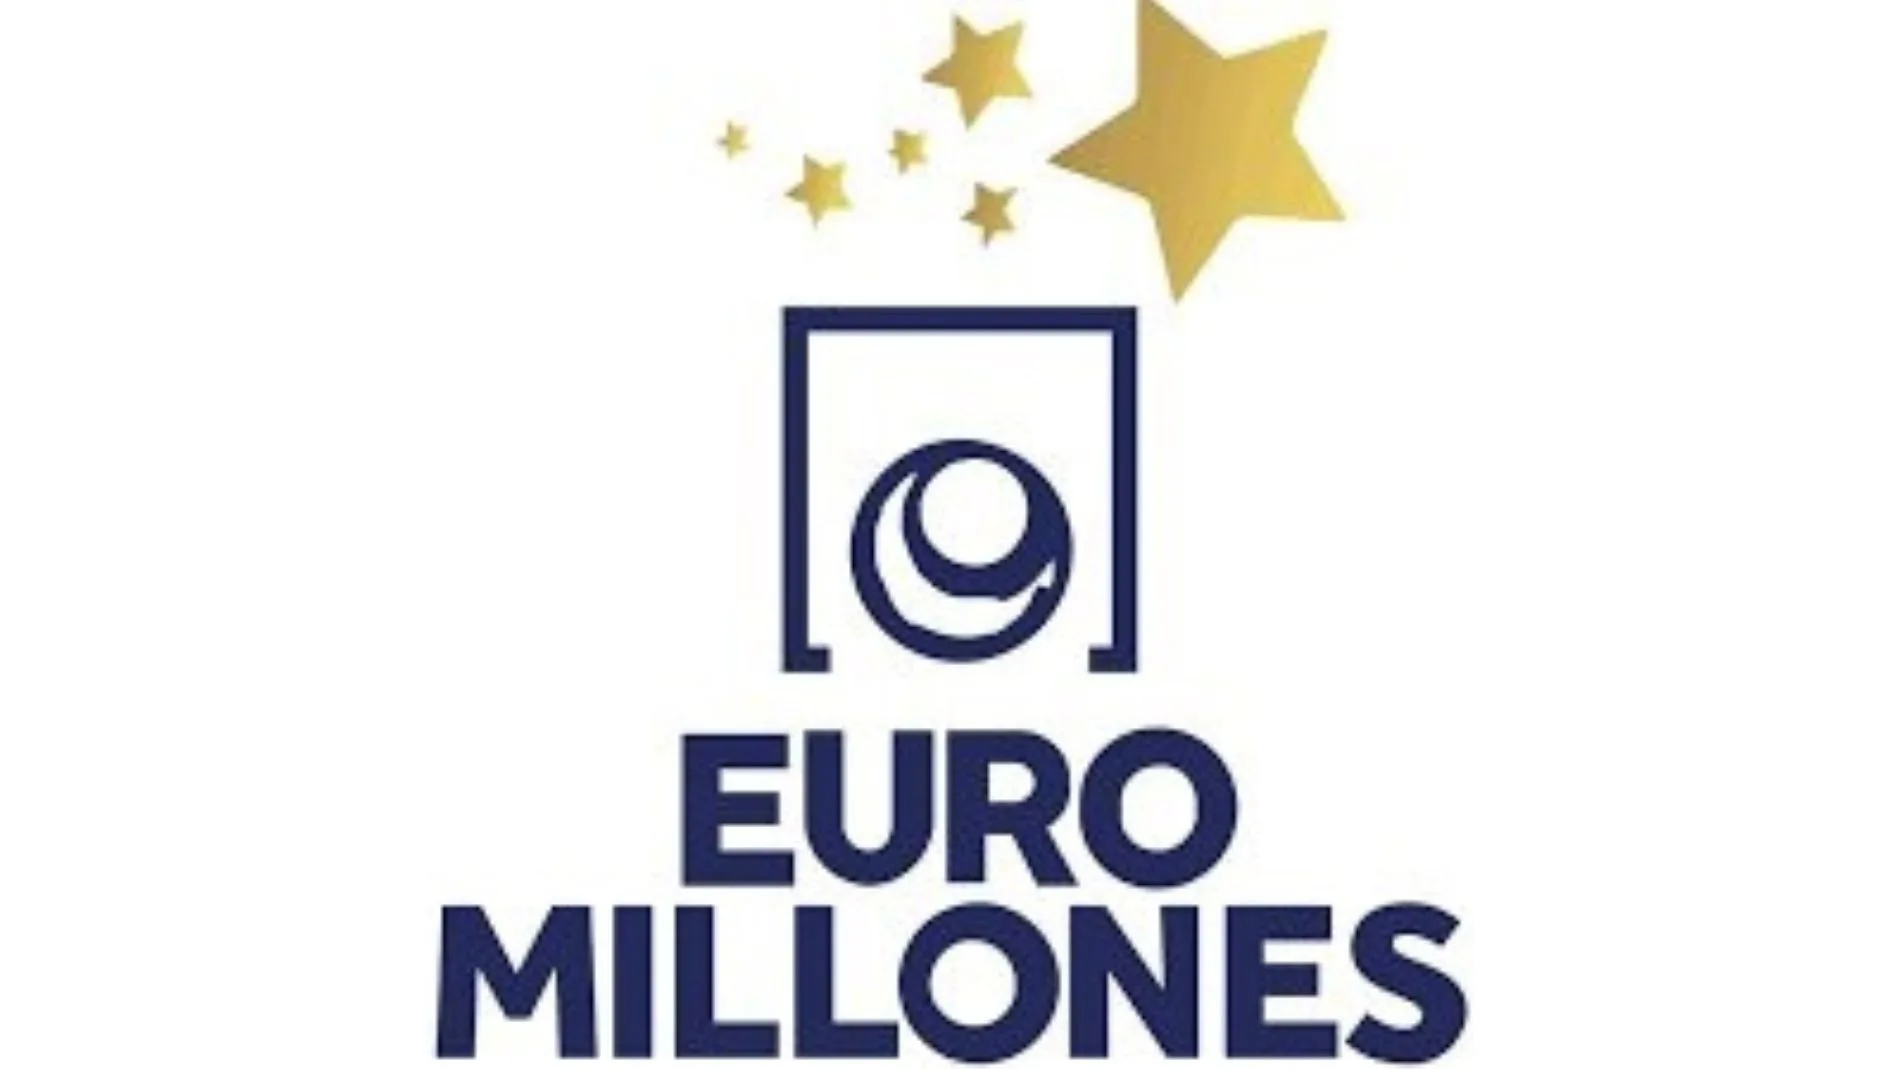 Imagen del logo del sorteo Euromillones